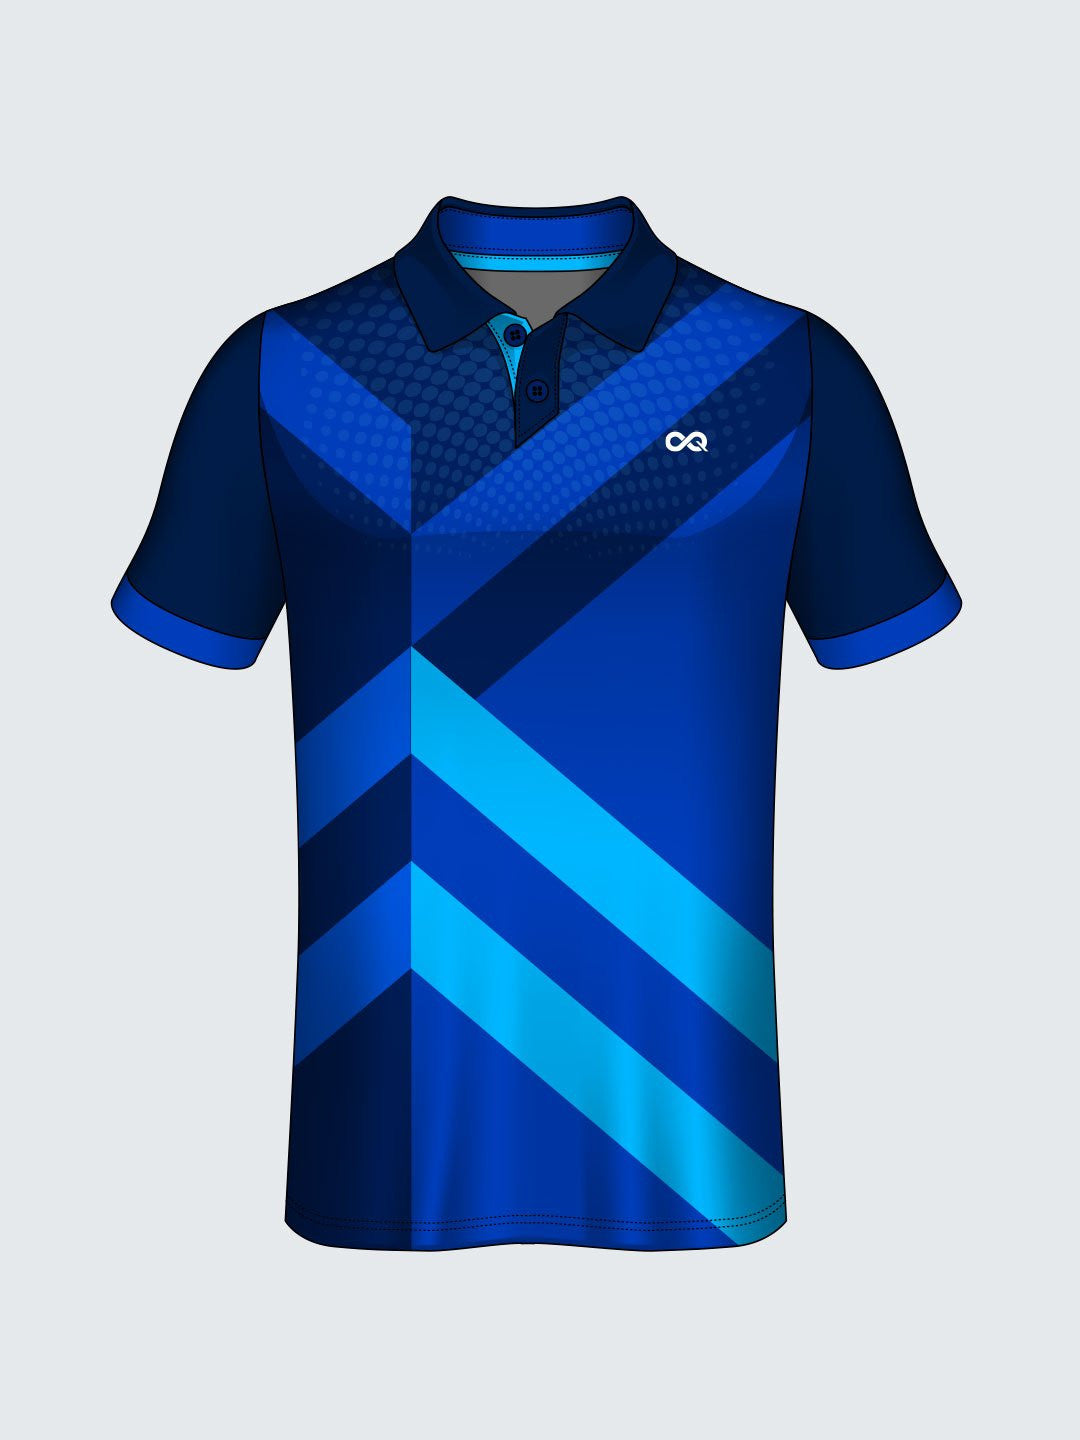 cricket jersey blue colour